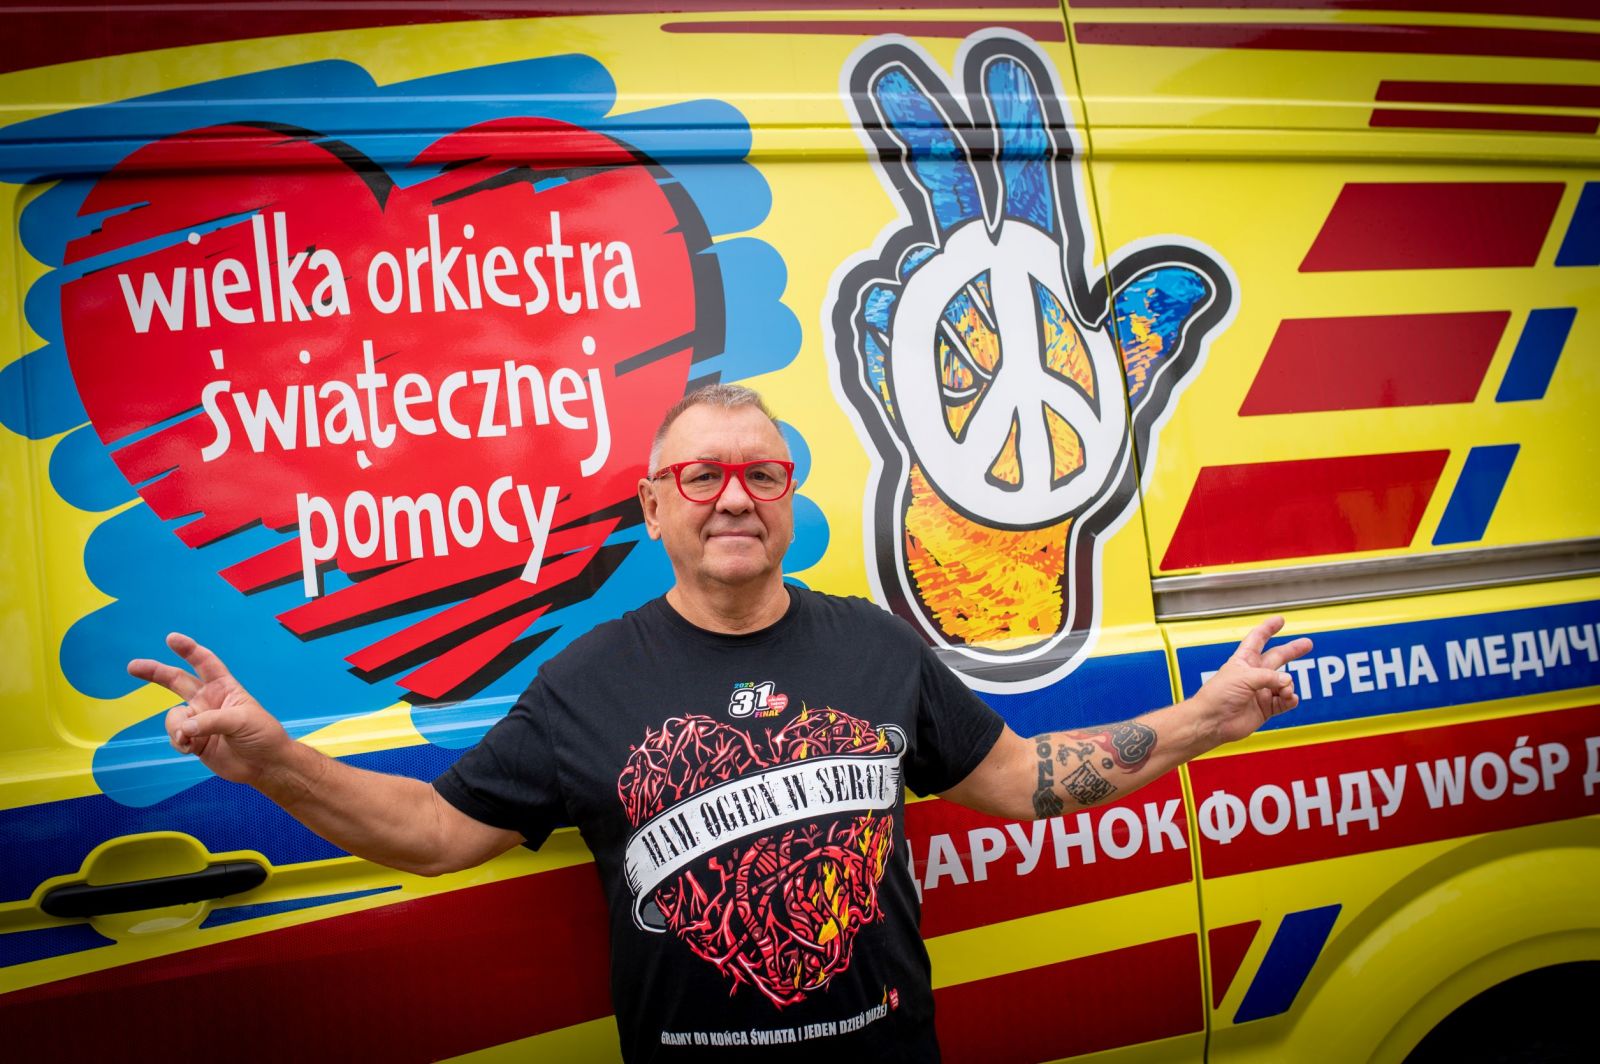 Jurek Owsiak and the ambulance for Kharkiv, photo: Łukasz Widziszowski